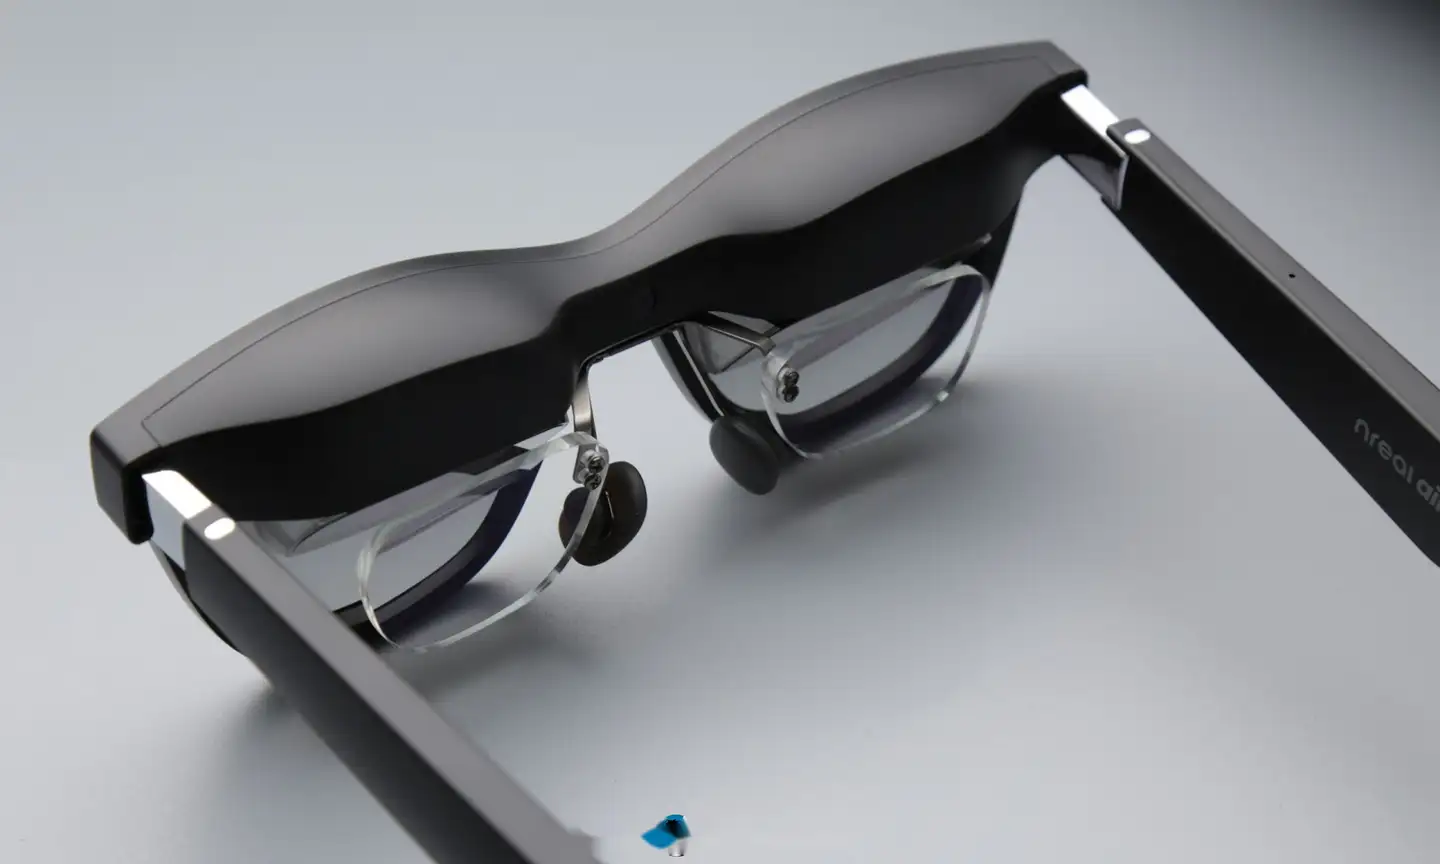 2299元玩AR，Nreal Air眼镜评测：索尼Micro OLED牛逼！ - 知乎